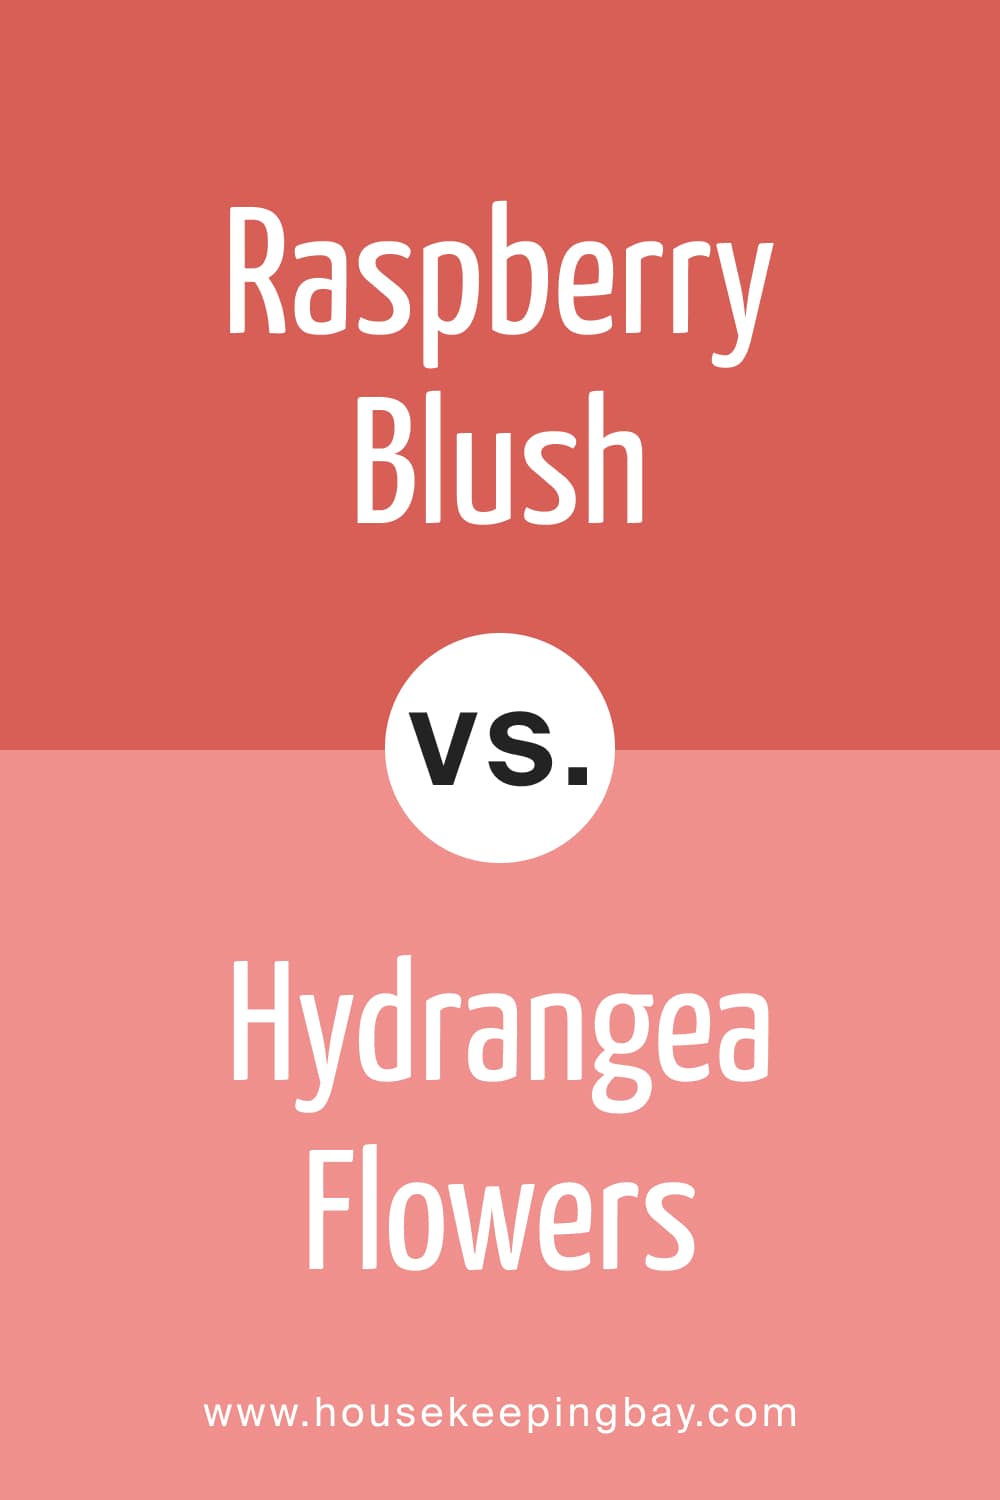 Raspberry Blush vs Hydrangea Flowers